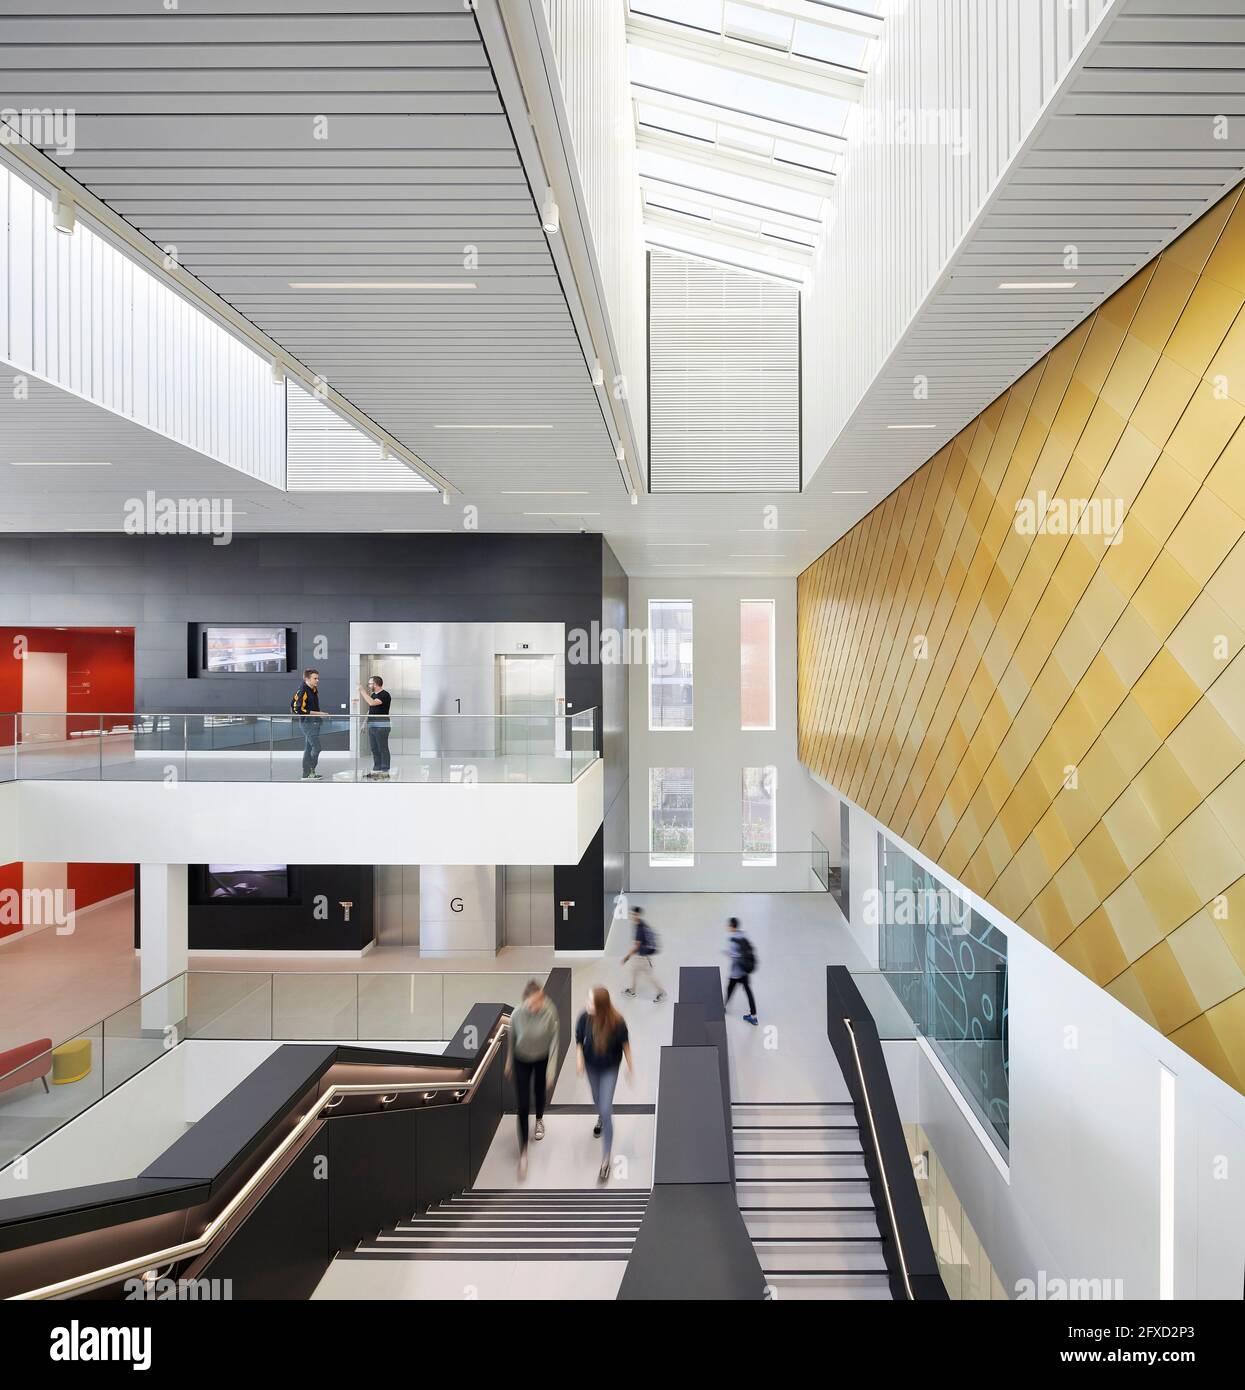 View across stairways and circulation spaces. University of Birmingham, Collaborative Teaching Laboratory, Birmingham, United Kingdom. Architect: Shep Stock Photo